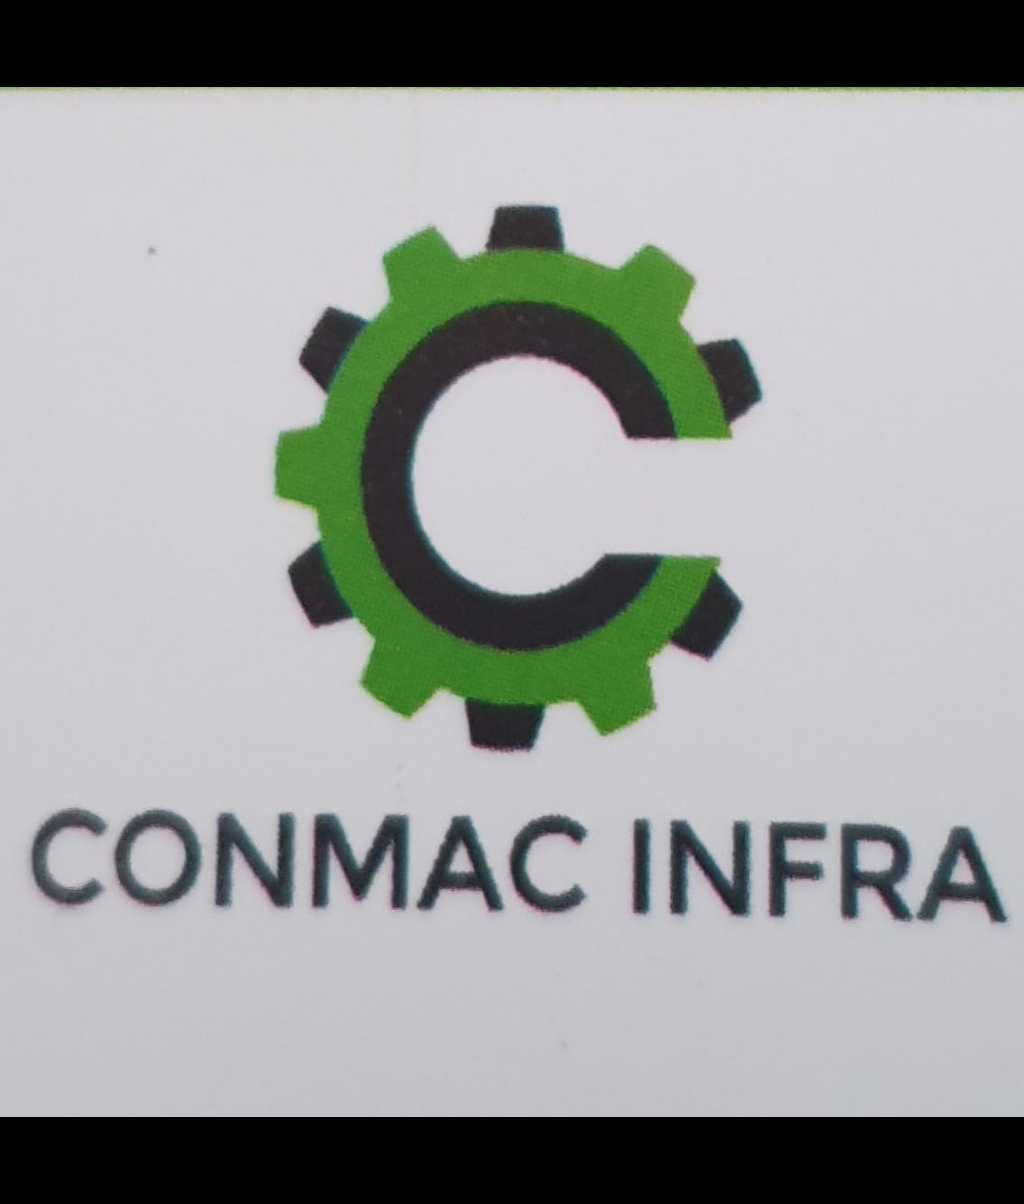 Conmac Infra